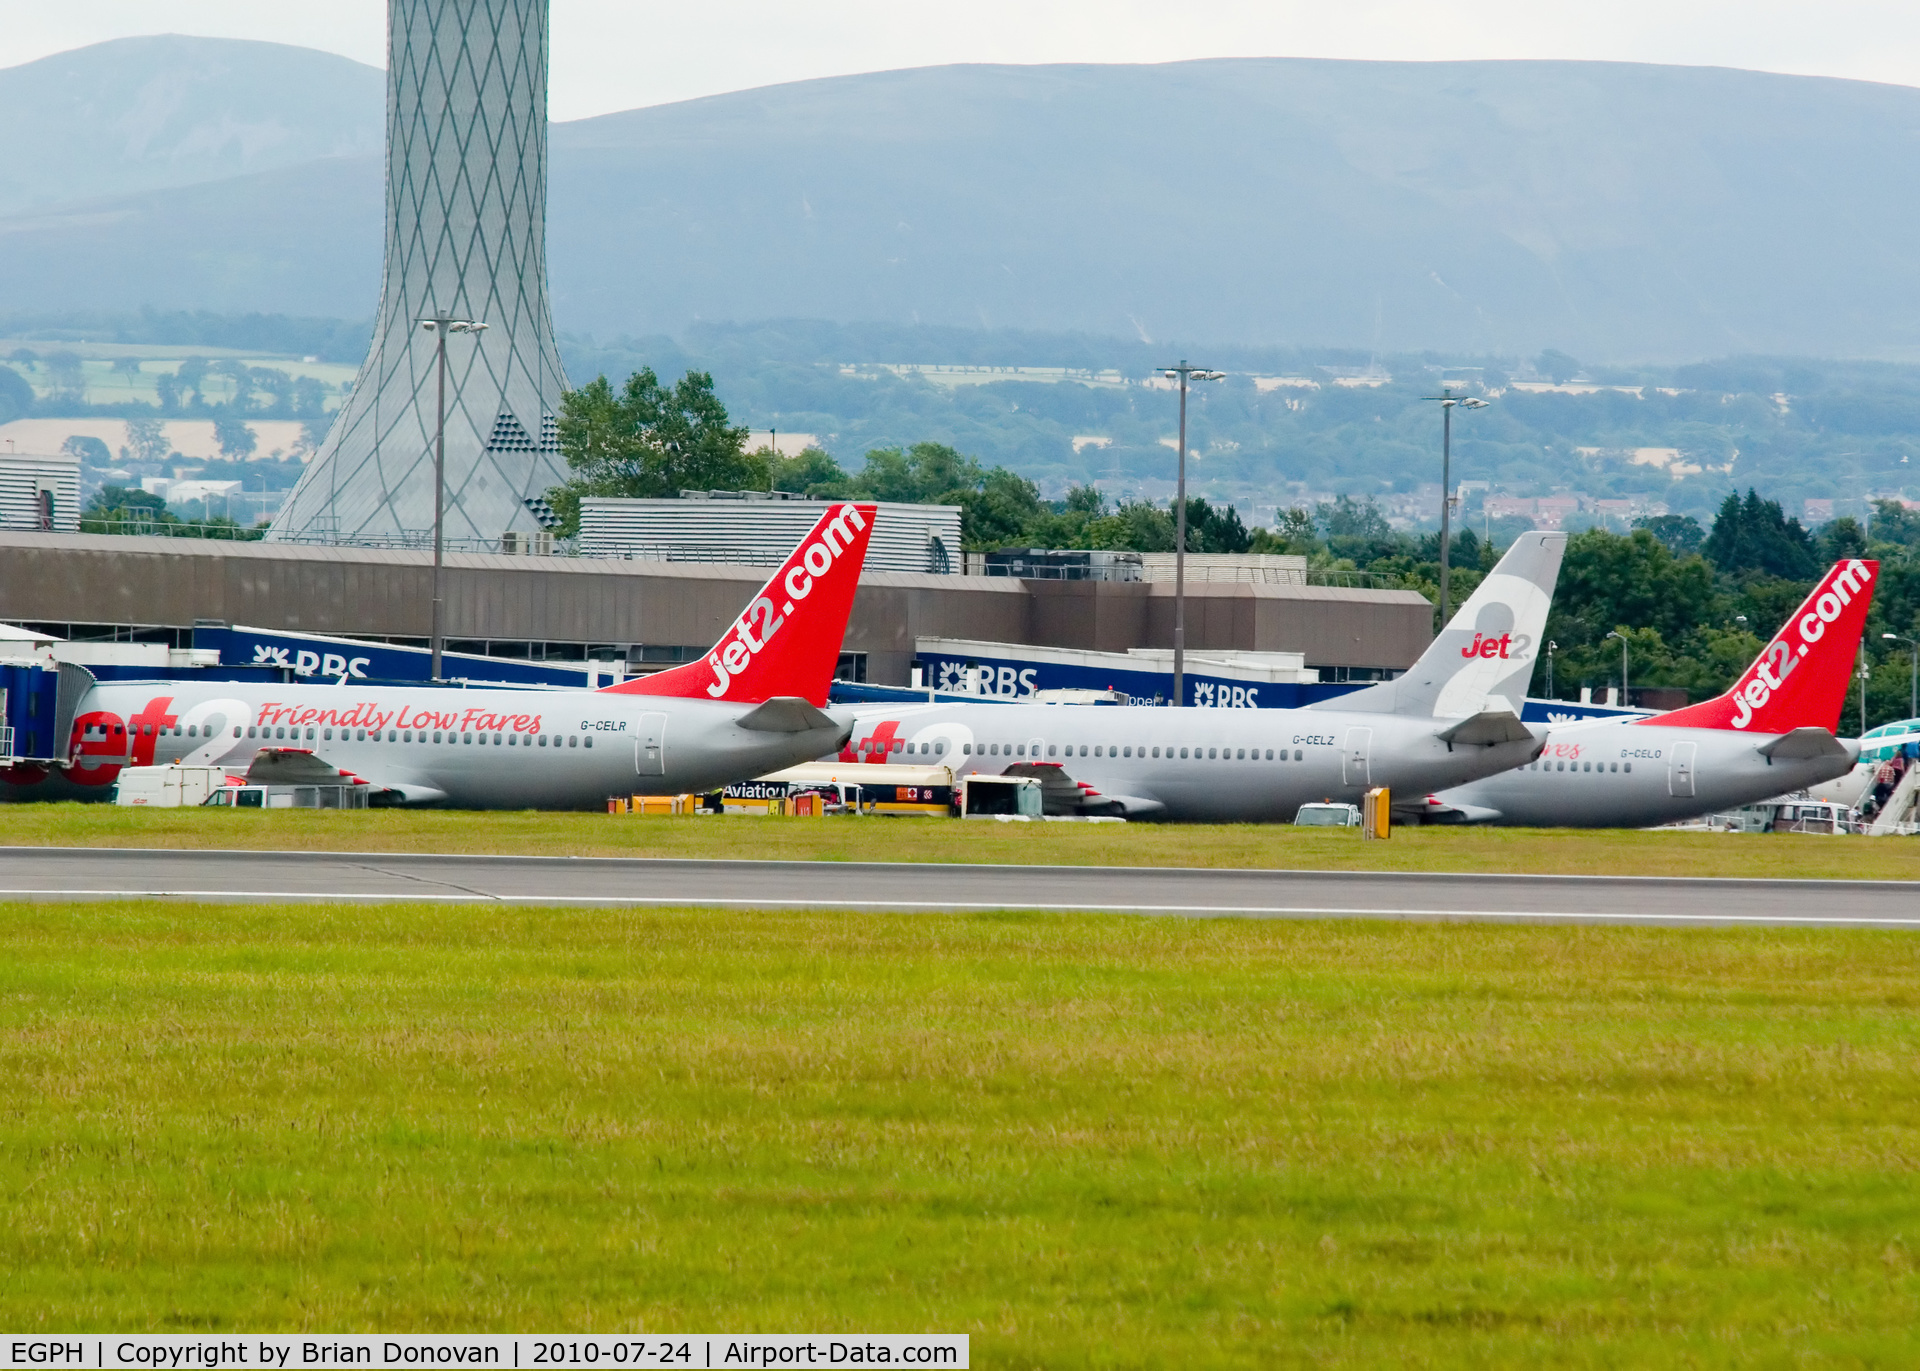 Edinburgh Airport, Edinburgh, Scotland United Kingdom (EGPH) - Three Jet 2 Boeing 737s on stand.